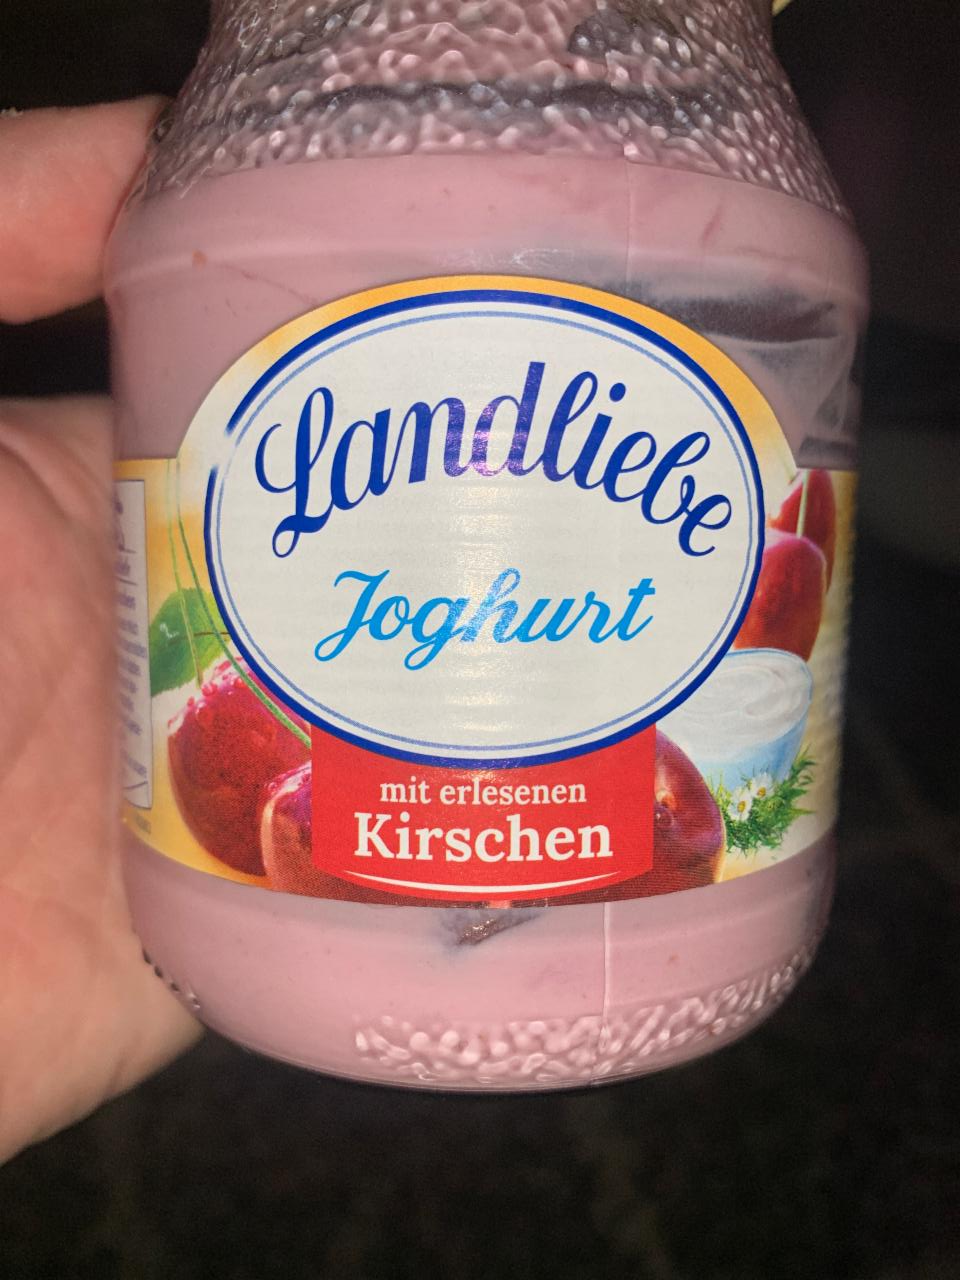 Landliebe Joghurt Kirschen nutričné kJ hodnoty a kalórie, 